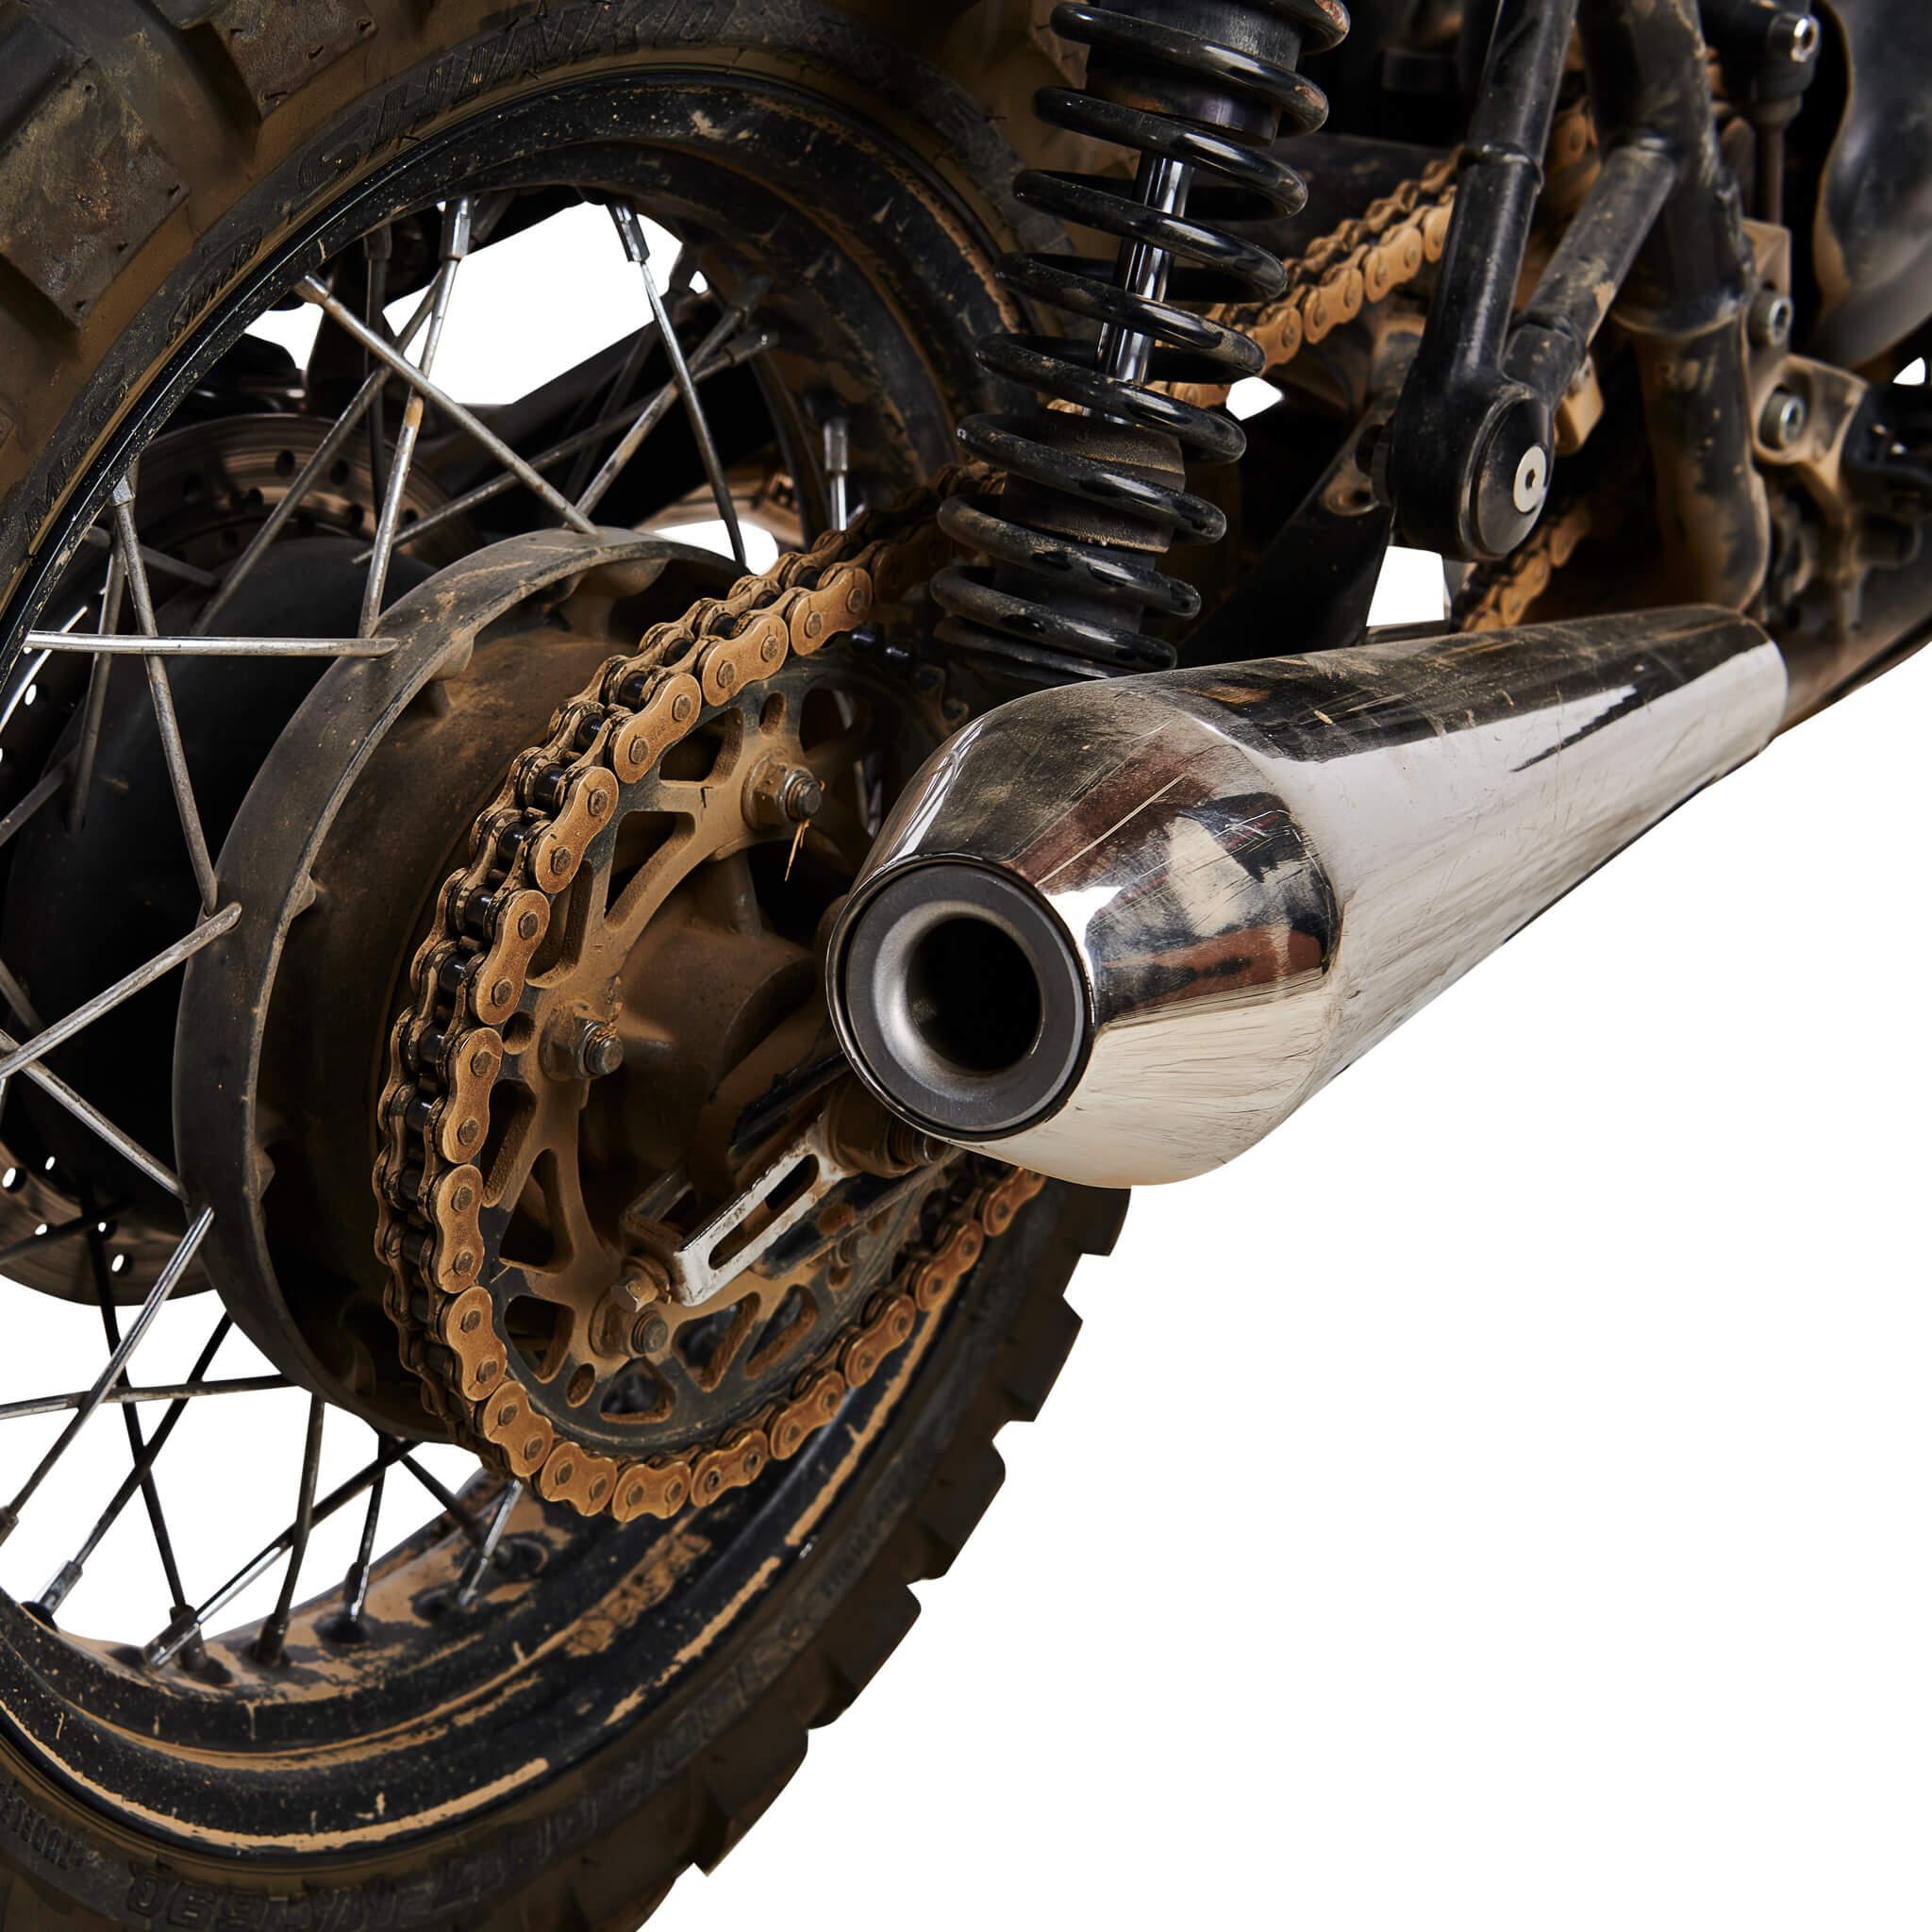 Predator Pro and Predator Carbon dB Killers for Triumph Motorcycles - British Customs